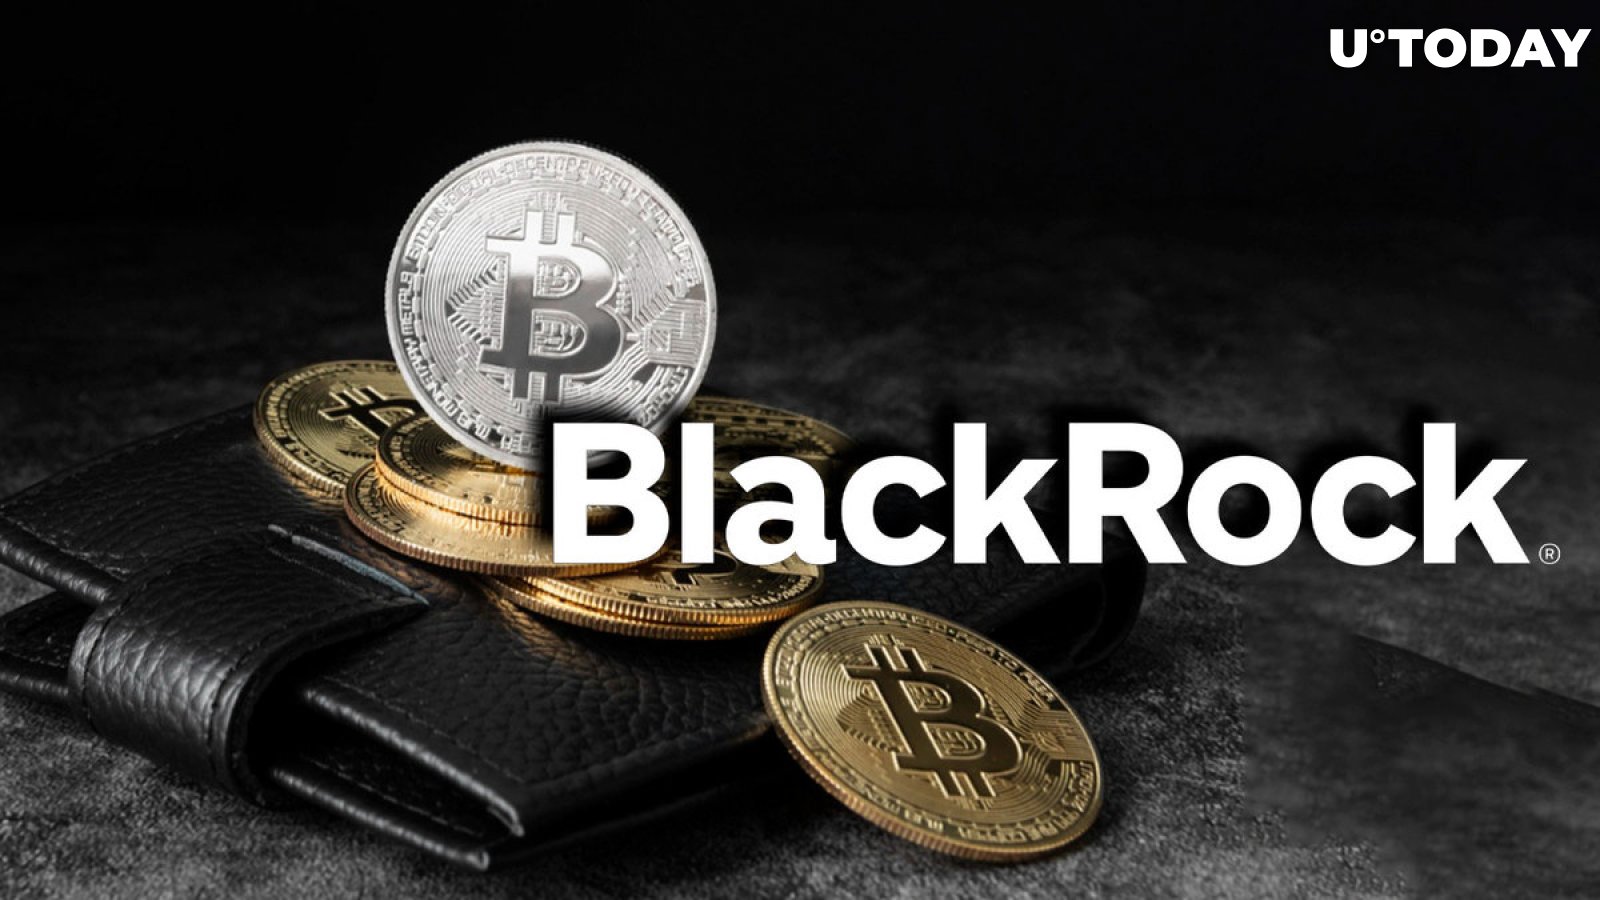 BlackRock Names Optimal Bitcoin Share in Investor's Risk Portfolio – You'll Be Surprised